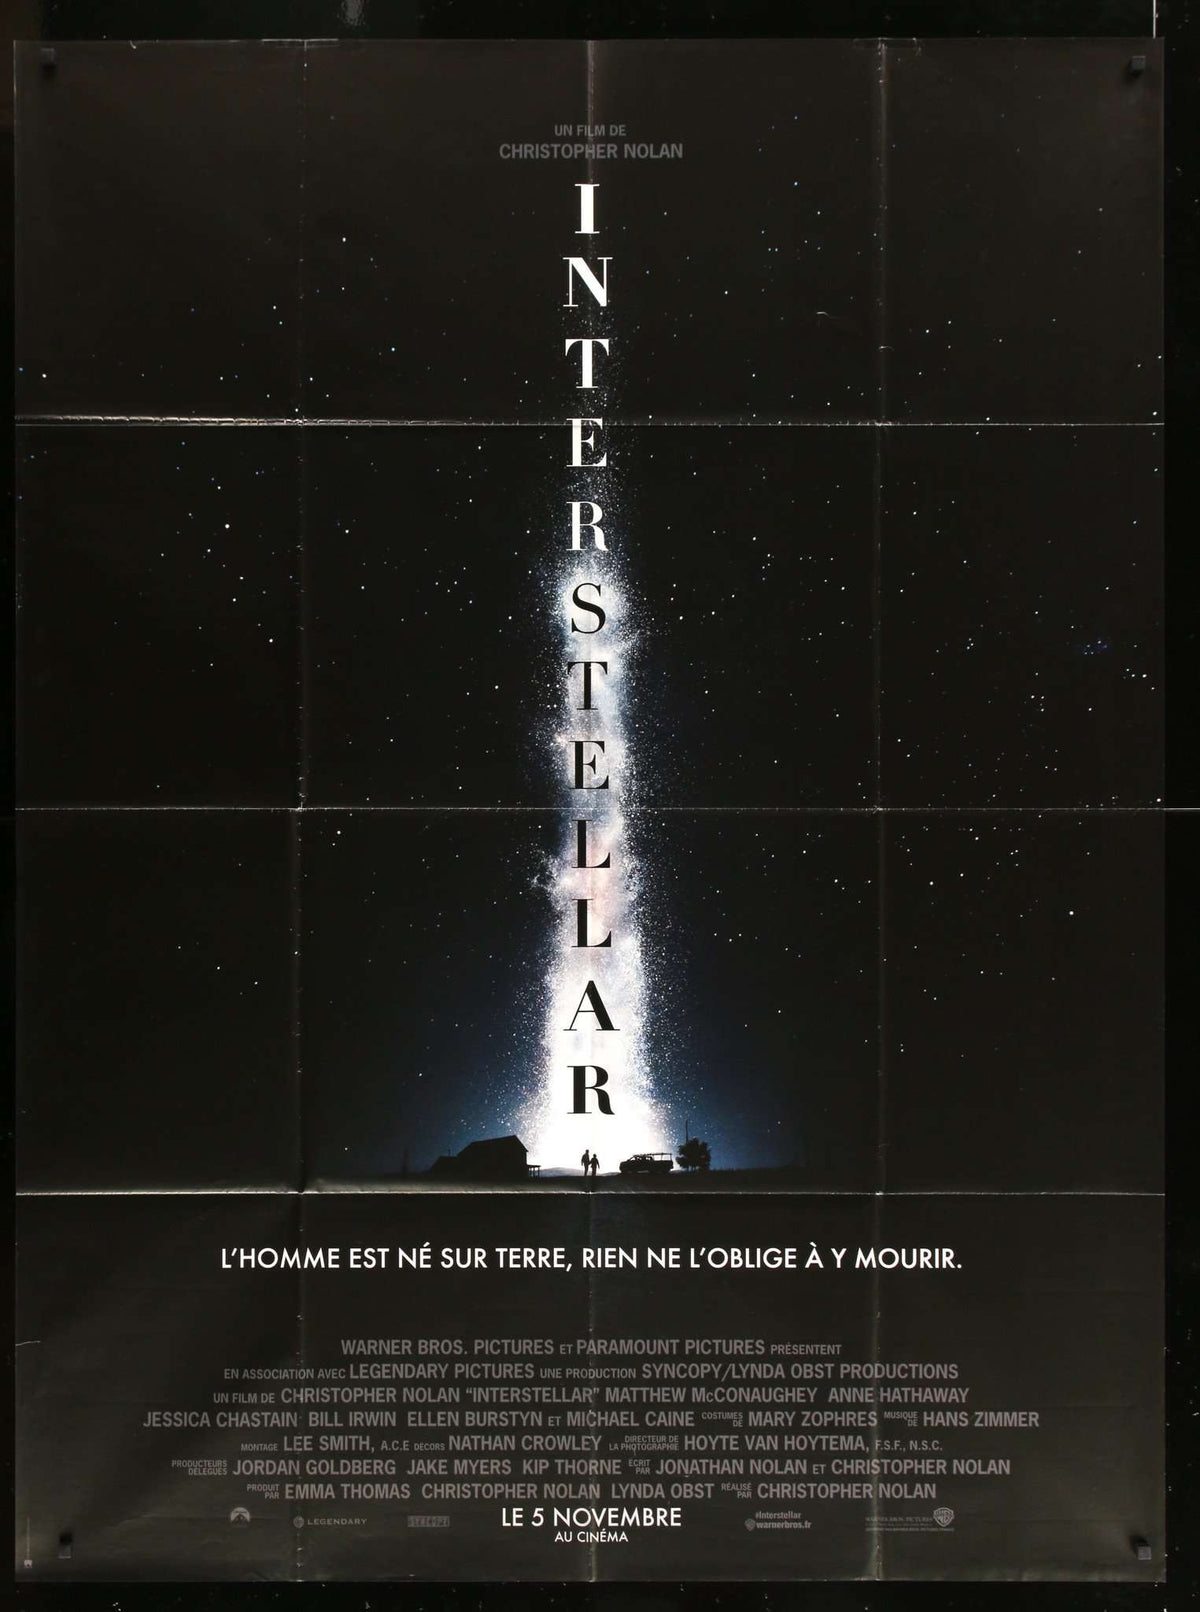 Interstellar (2014) original movie poster for sale at Original Film Art